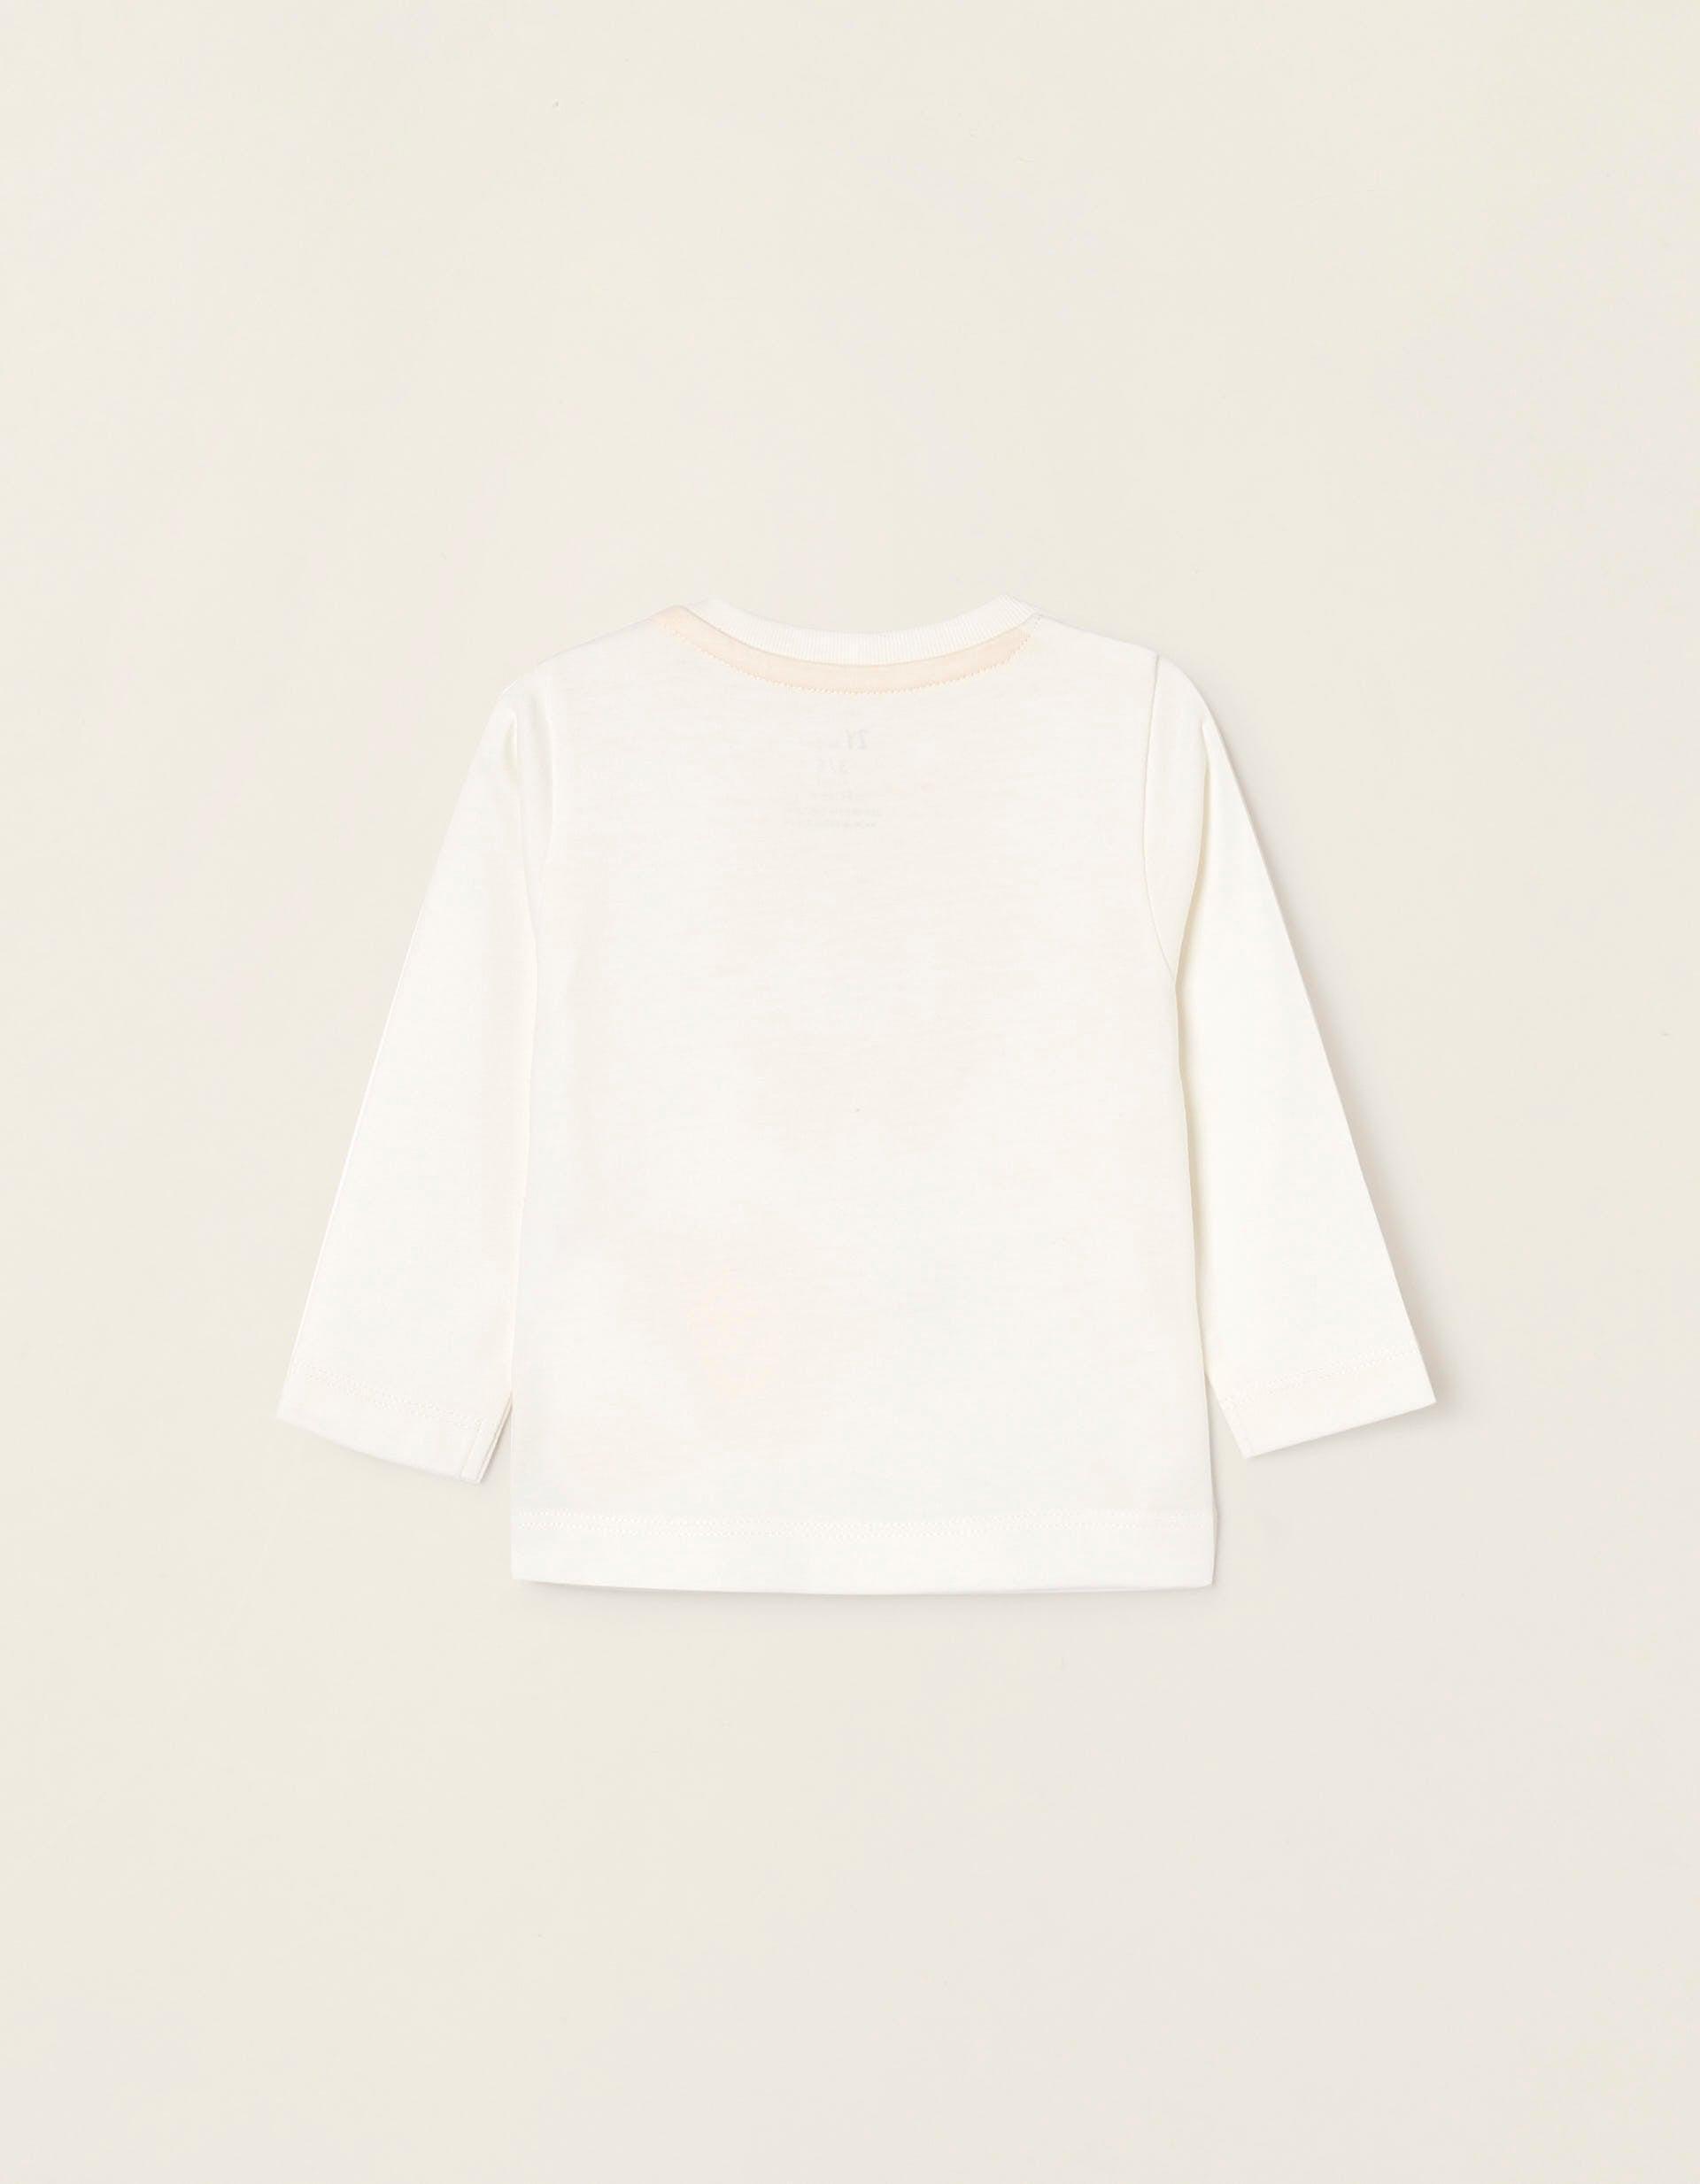 Zippy - White Long-Sleeve Cotton T-Shirt, Baby Boys